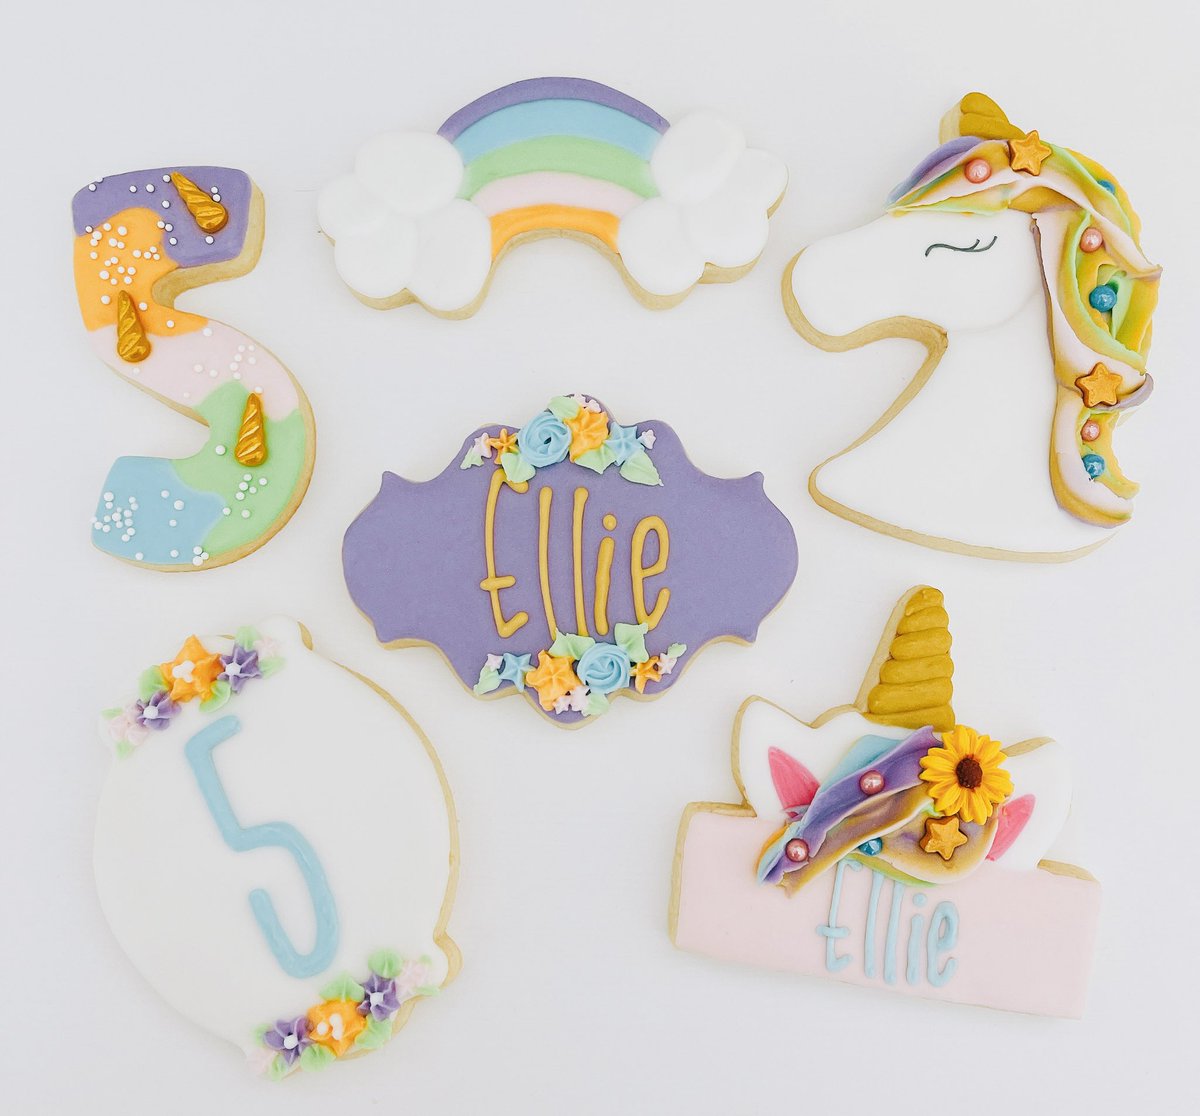 Unicorns and rainbows make such a great birthday celebration 🥰 

#celebration #sugarcookies #decoratedsugarcookies #cookiesofinstagram #birthday #royalicingcookies #unicorn🦄